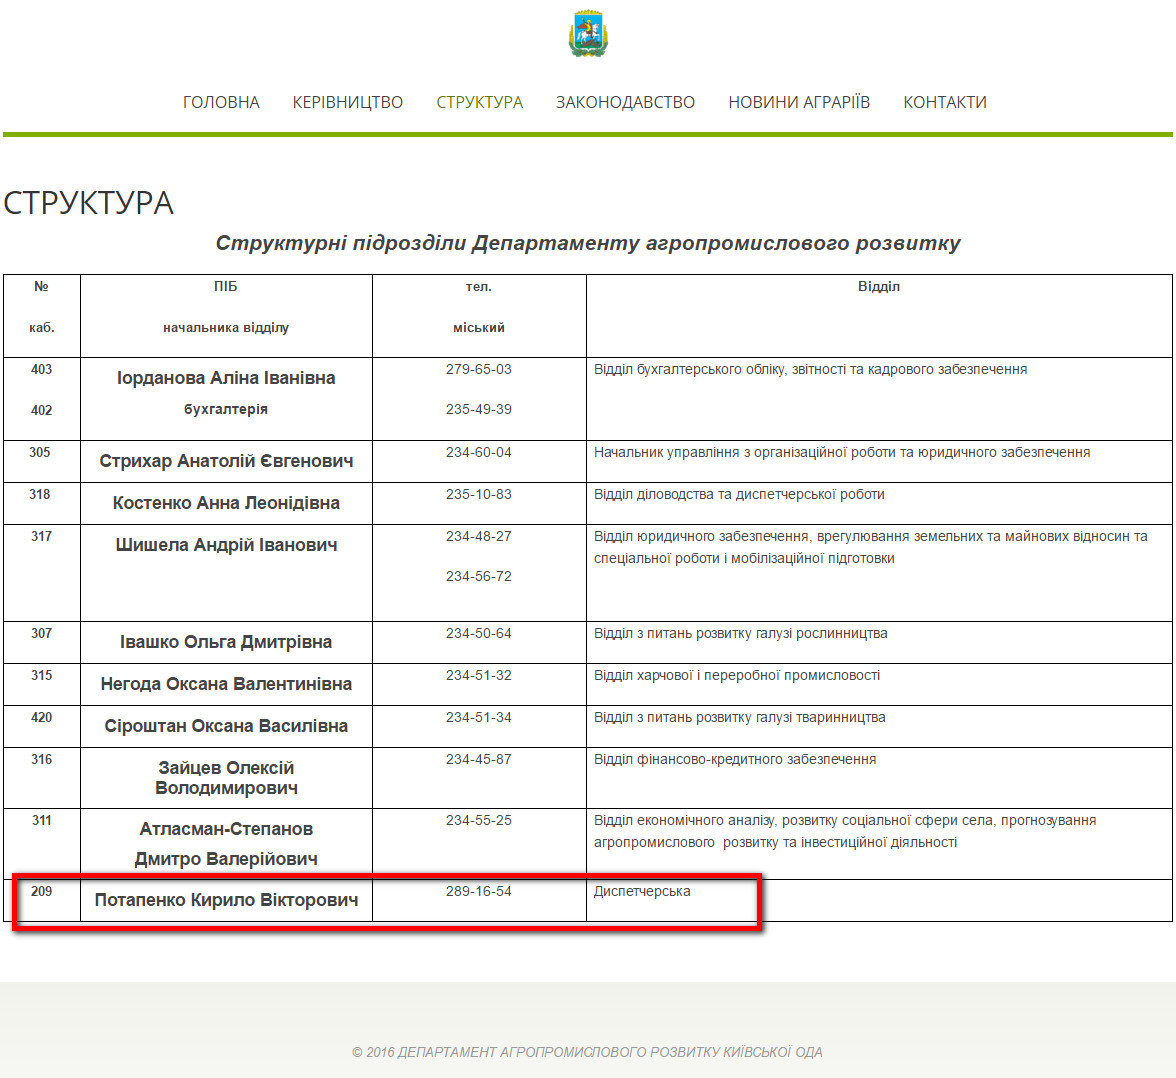 http://dapr.koda.gov.ua/index.php/struktura